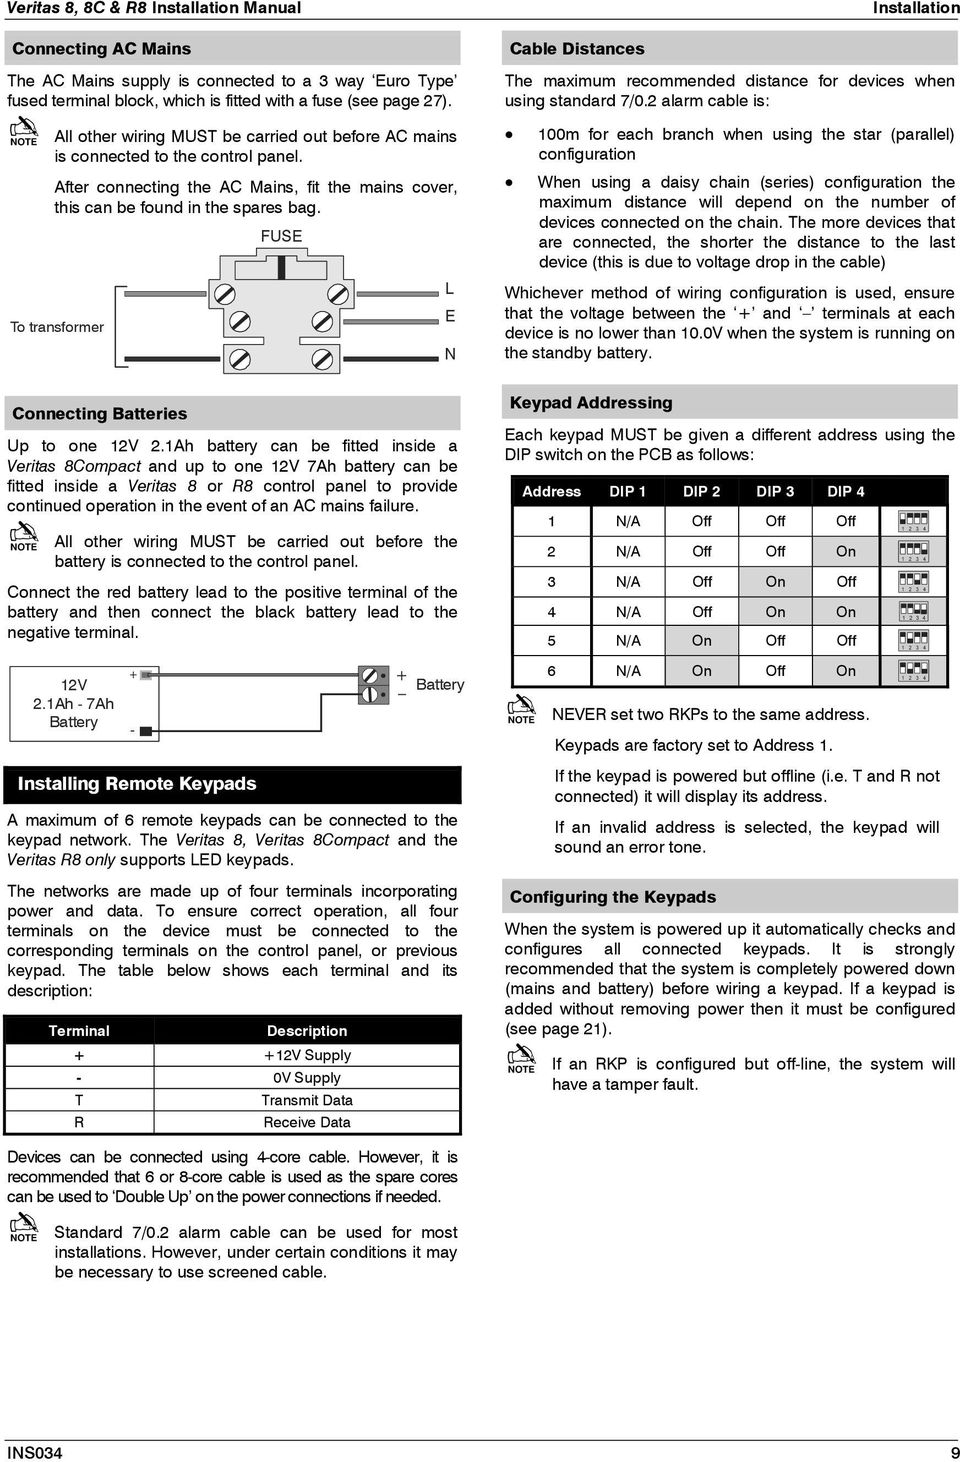 Voting Texecom Installation Manual